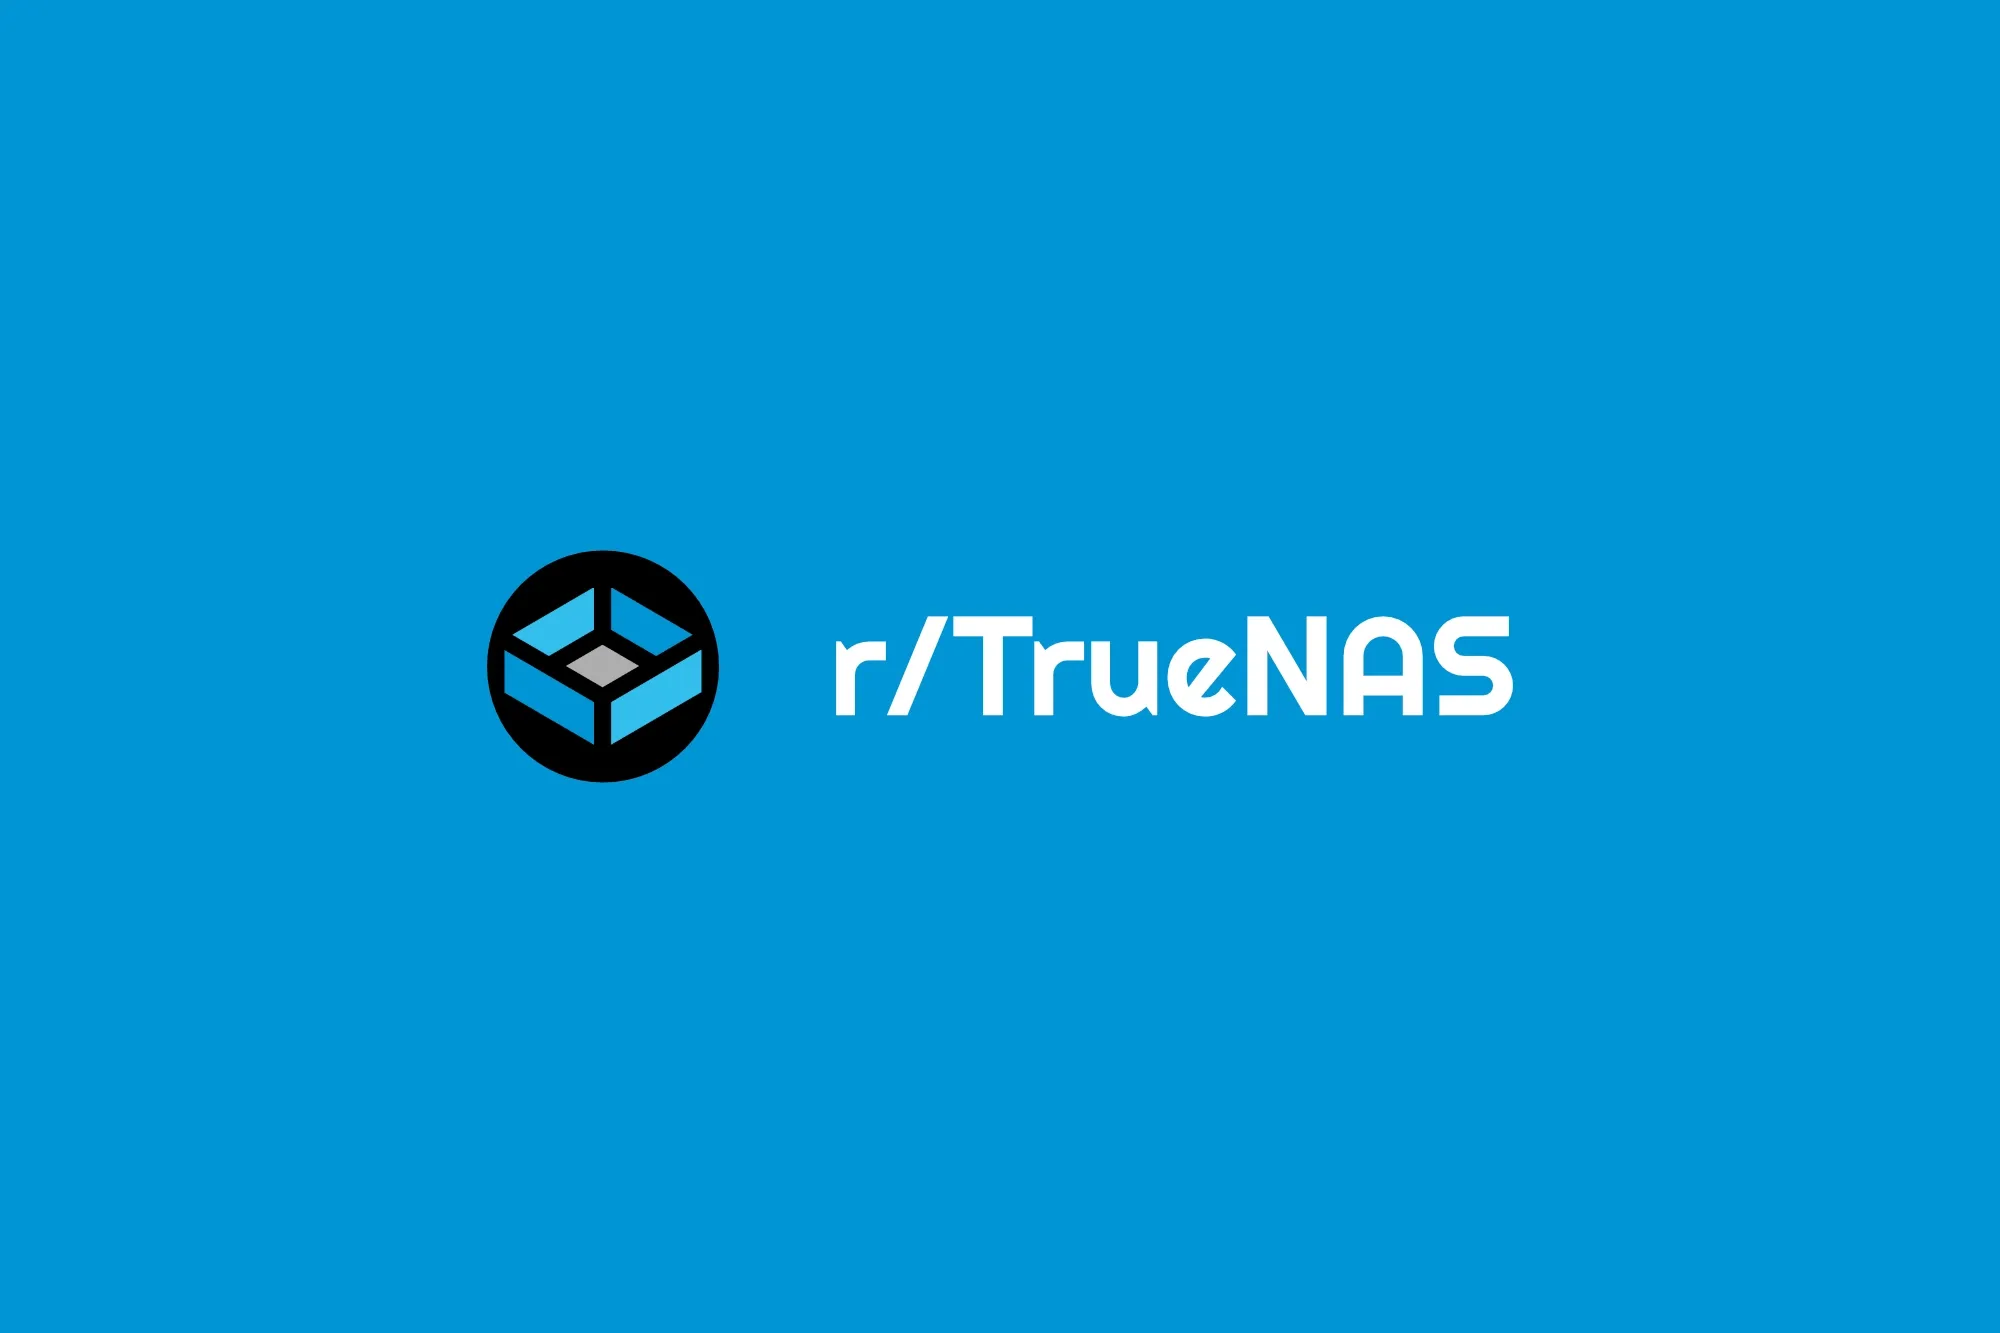 r/TrueNAS: New to TrueNAS ISCSI